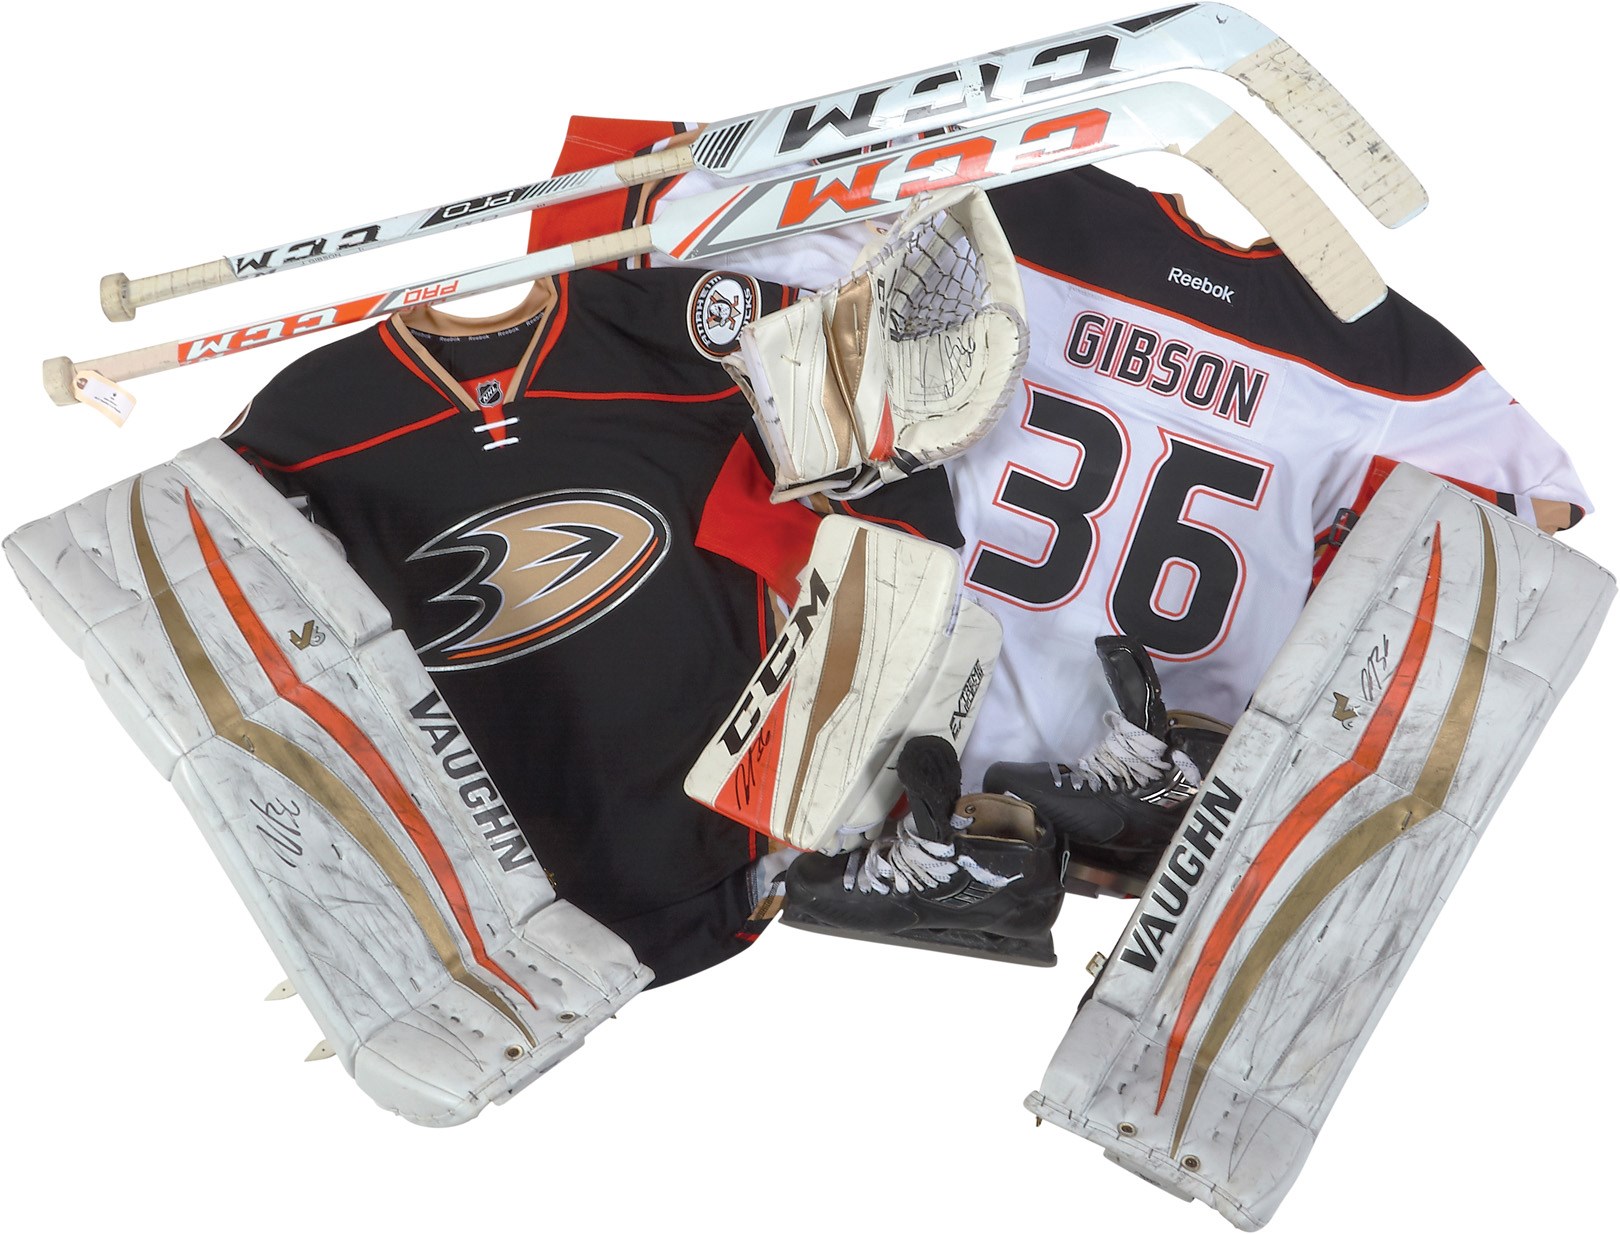 Hockey - John Gibson Anaheim Ducks Game Worn Jersey, Goalie Equipment and More